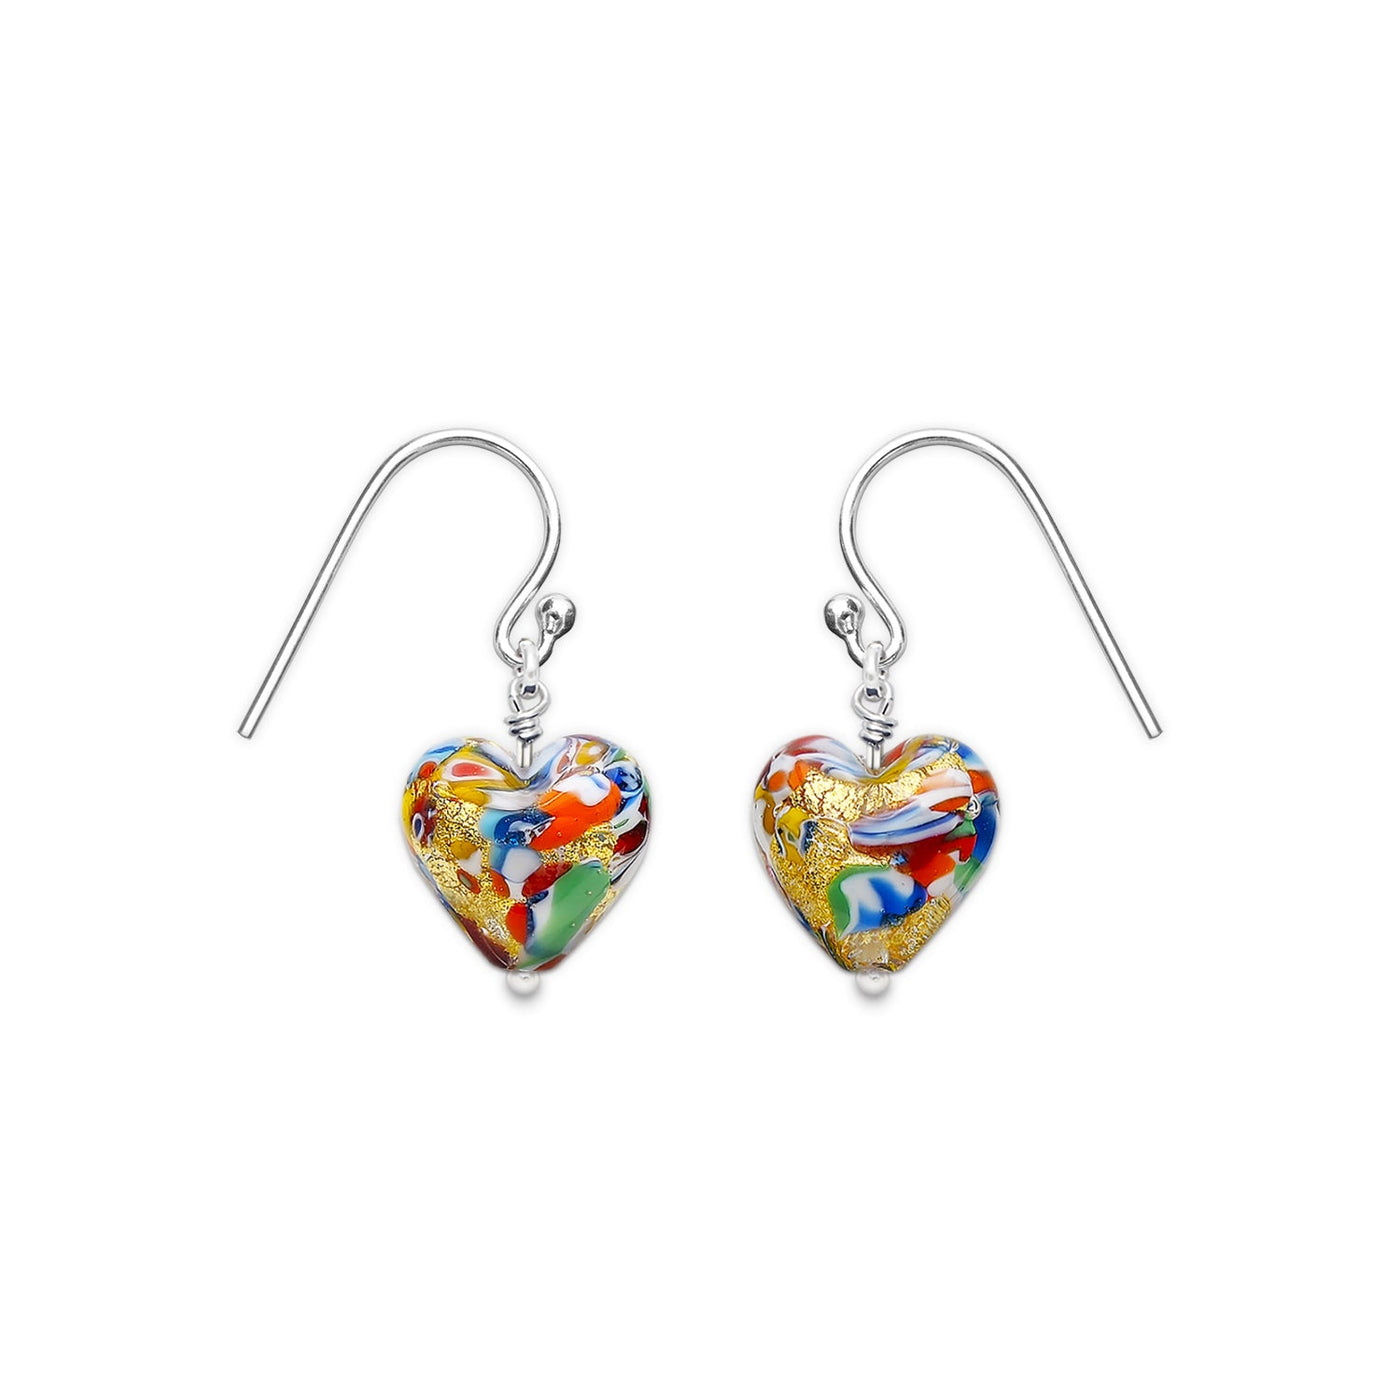 THE KISS | Bling Heart Earrings - Earrings